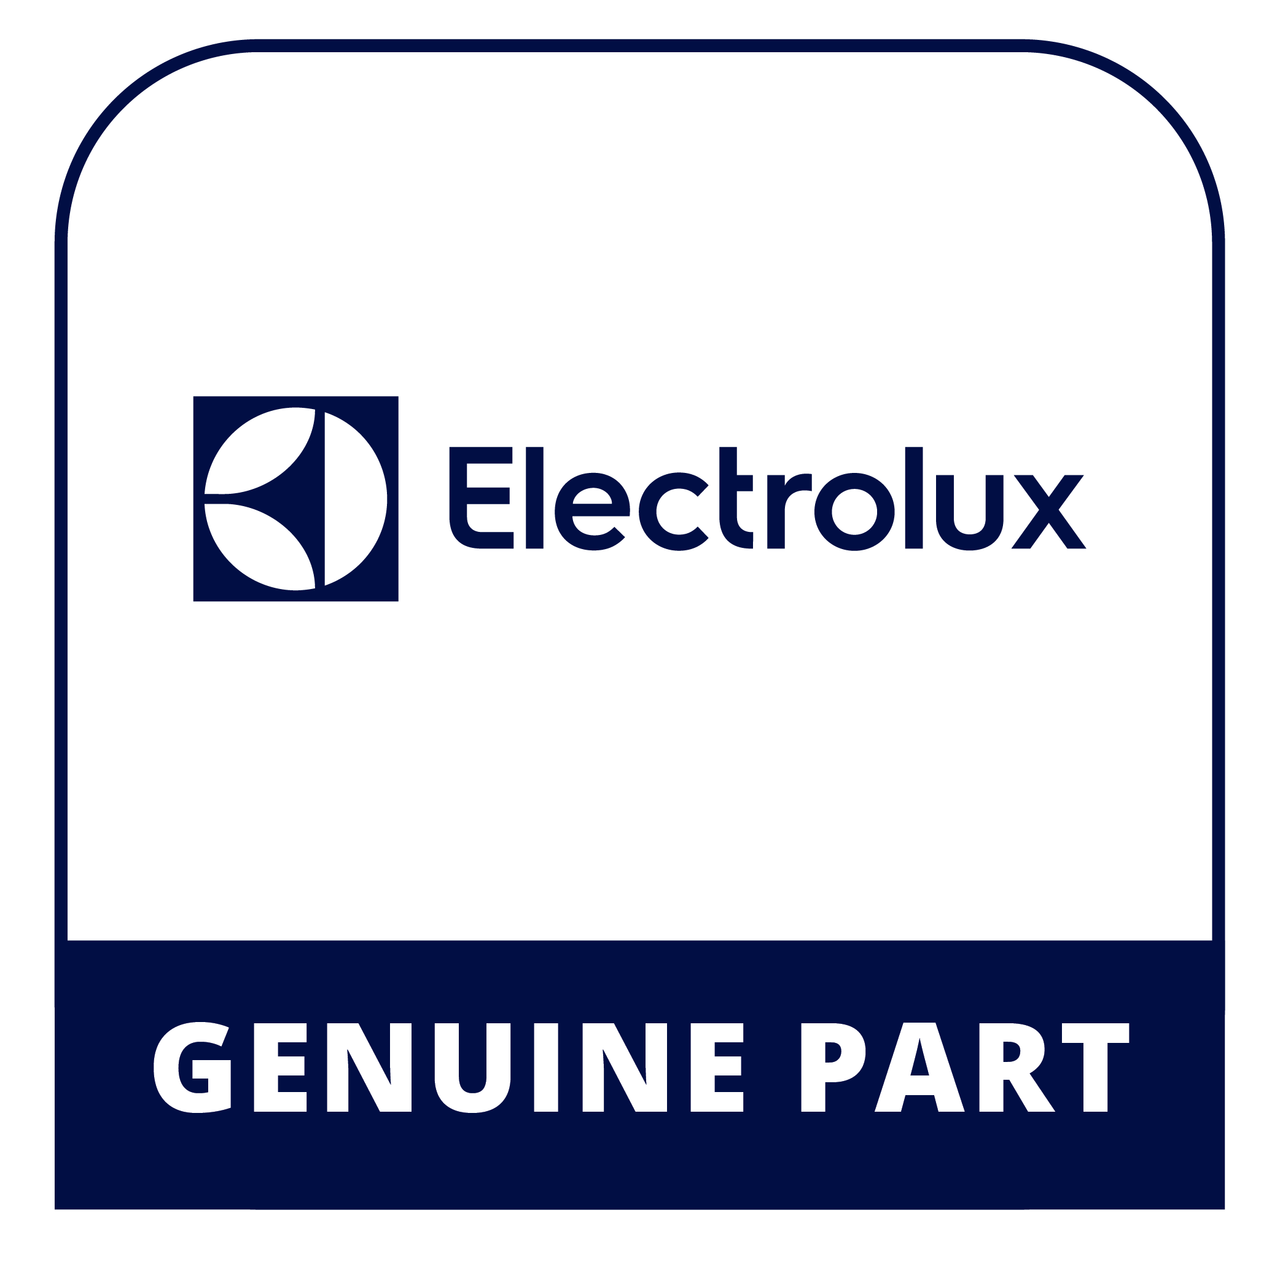 Frigidaire - Electrolux 297269408 - Overlay - Genuine Electrolux Part